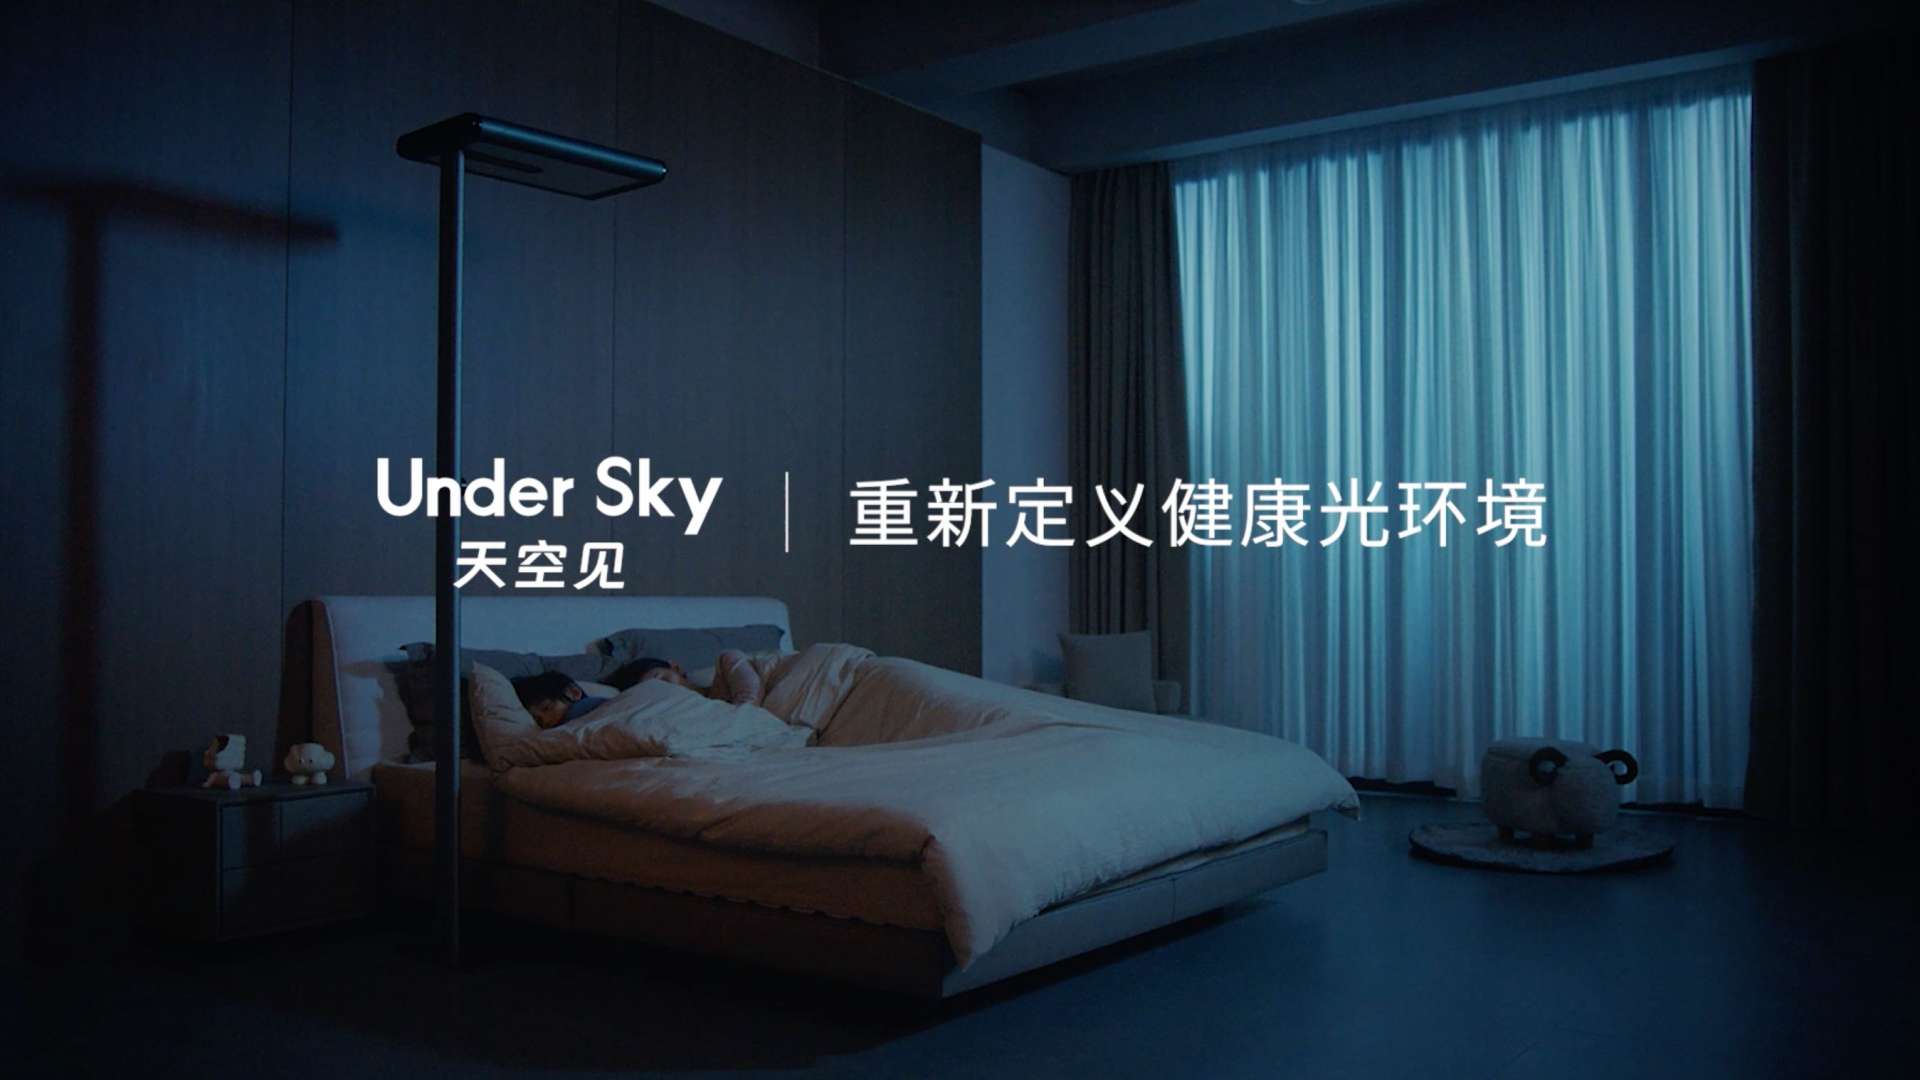 Under Sky 丨天空见 大路灯台灯